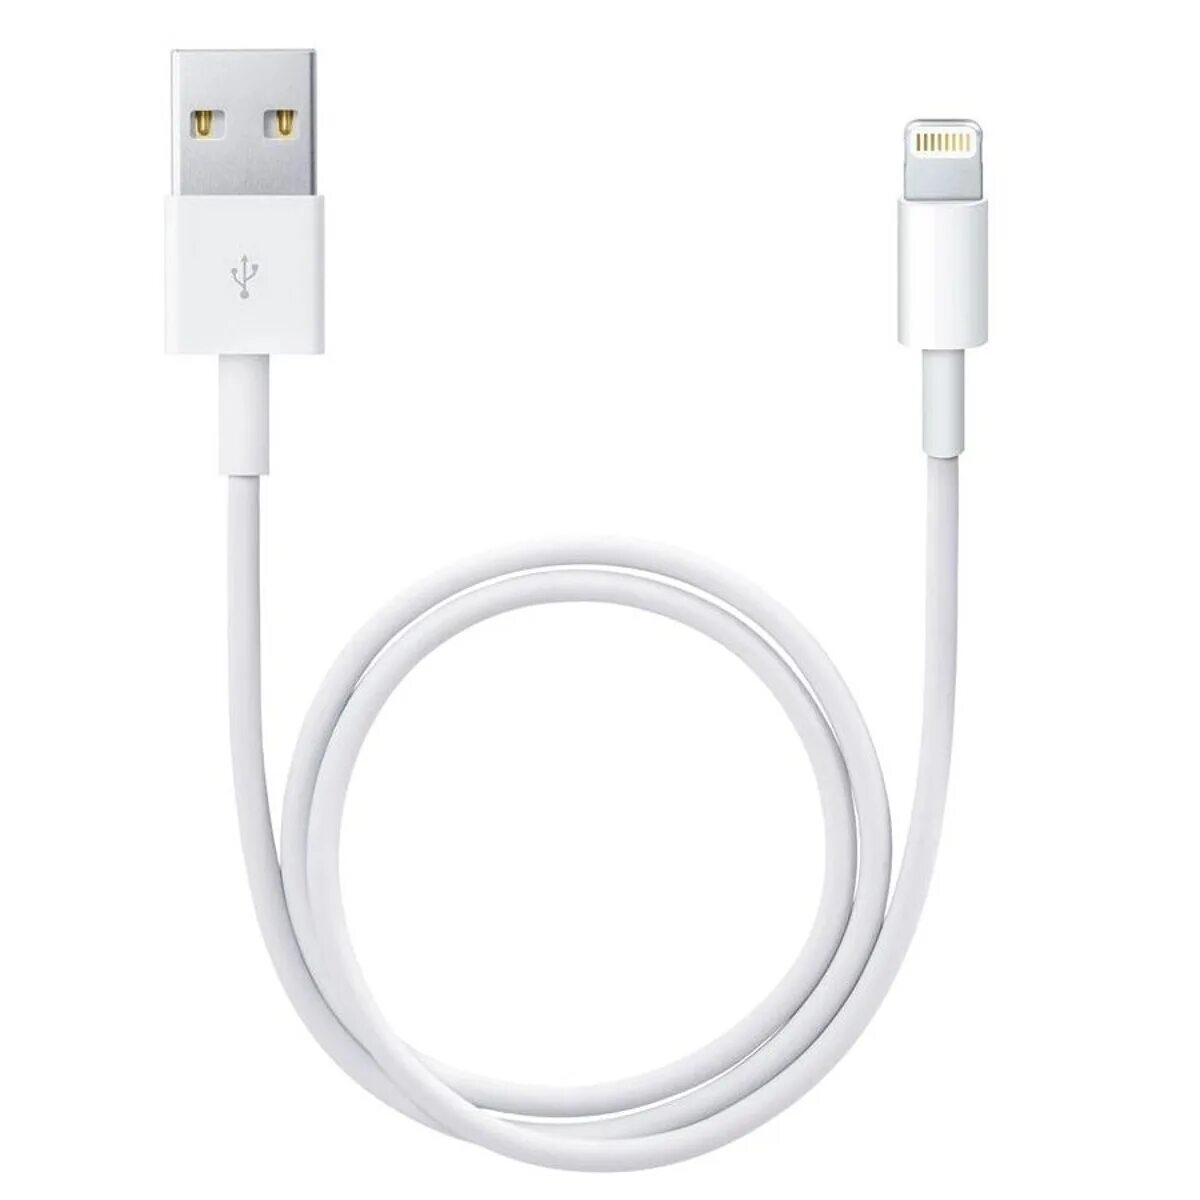 Кабель для айфона оригинал купить. Apple USB-C charge Cable (2m). Кабель Apple mxly2zm/a, Lightning (m) - USB (M), 1м, MFI, белый. Кабель Apple USB - Lightning mxly2zm/a (1 метр). Apple Cable Lightning to USB 1 M md818zm/a.